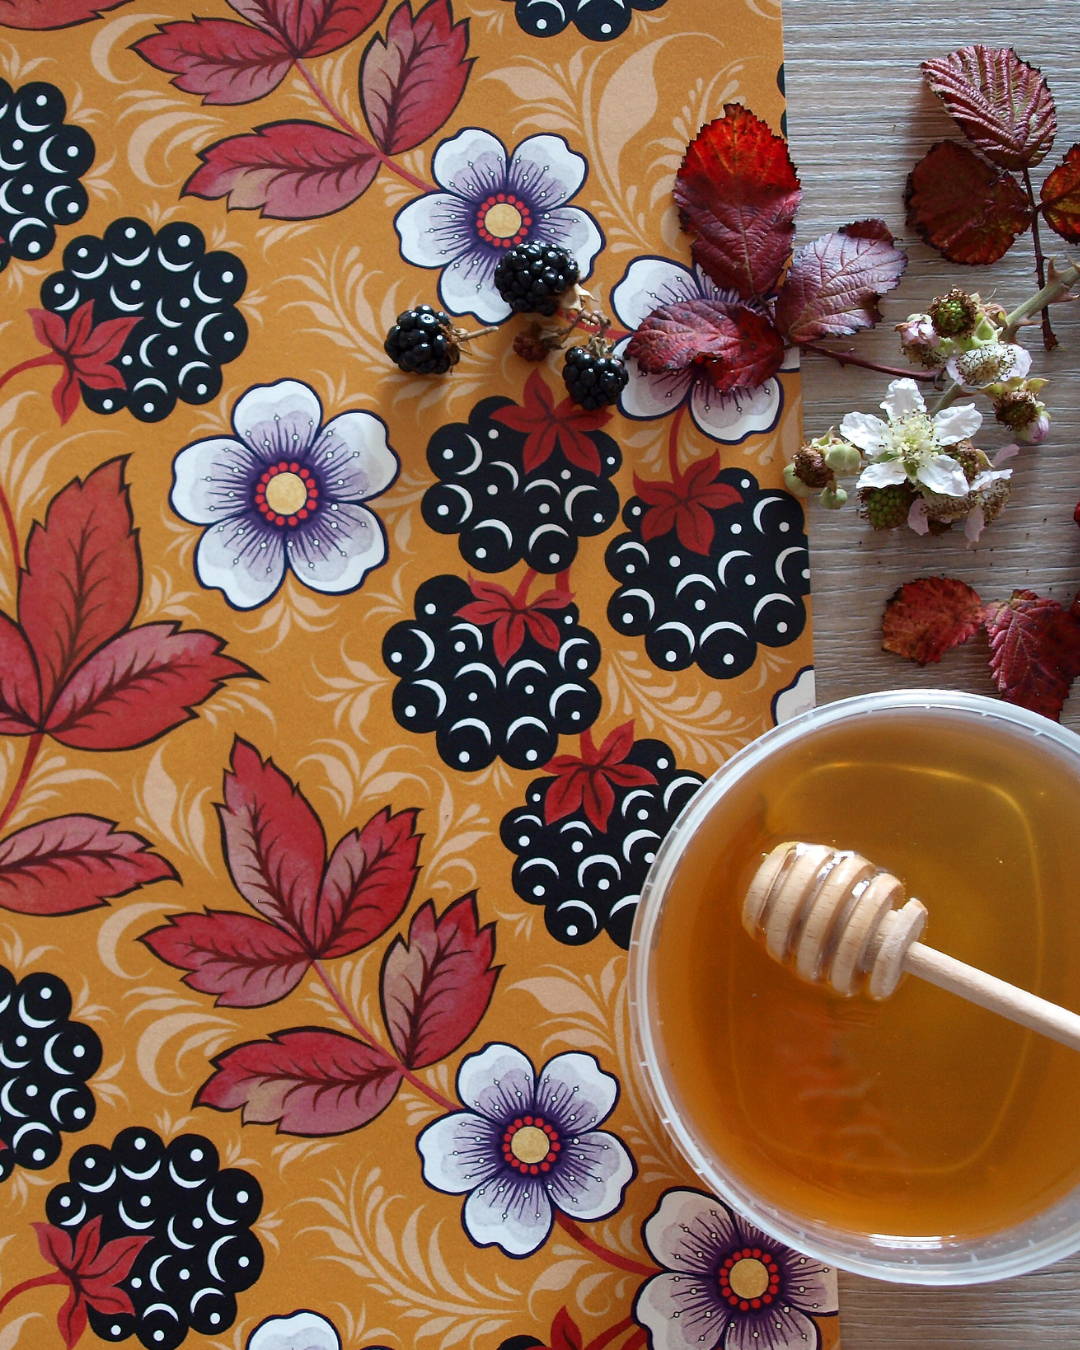 blackberry-wallpaper-autumn-fall-floral-print-olenka-british-design-made-in-england